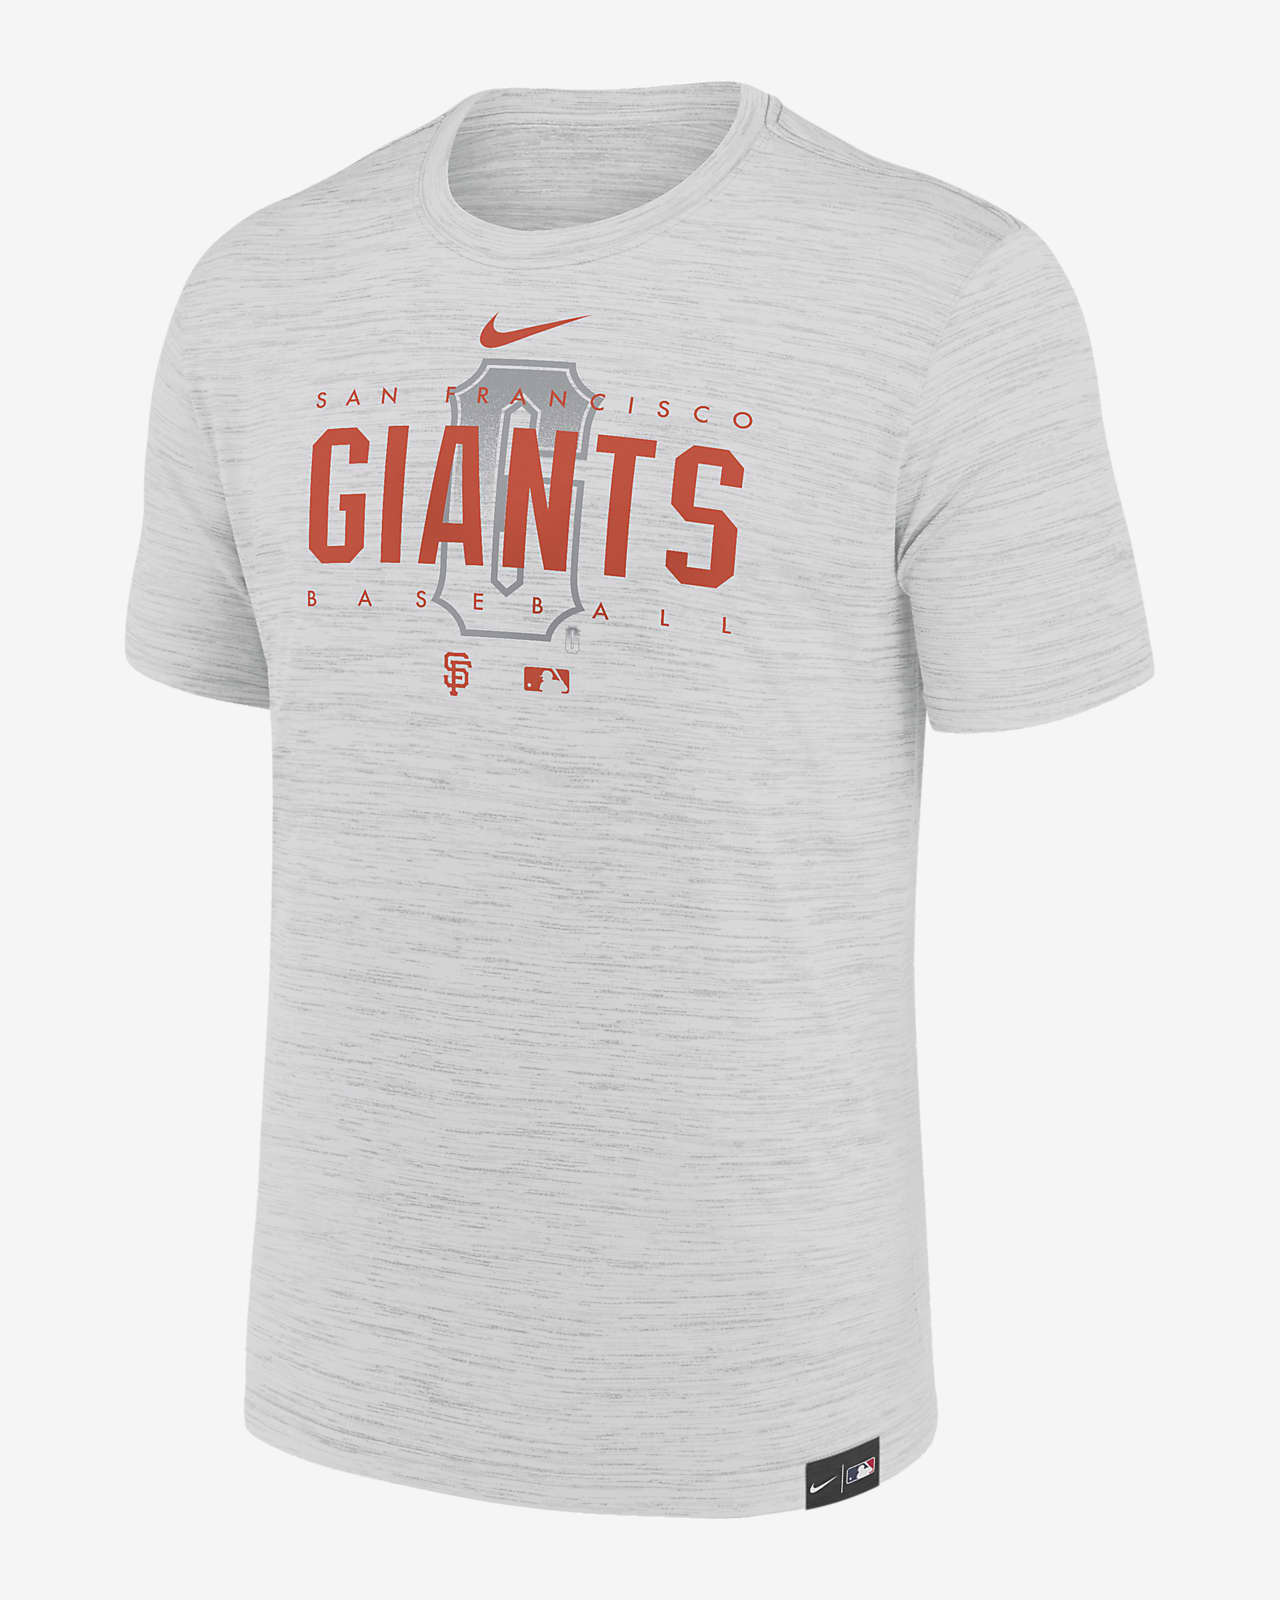 giants sf shirt